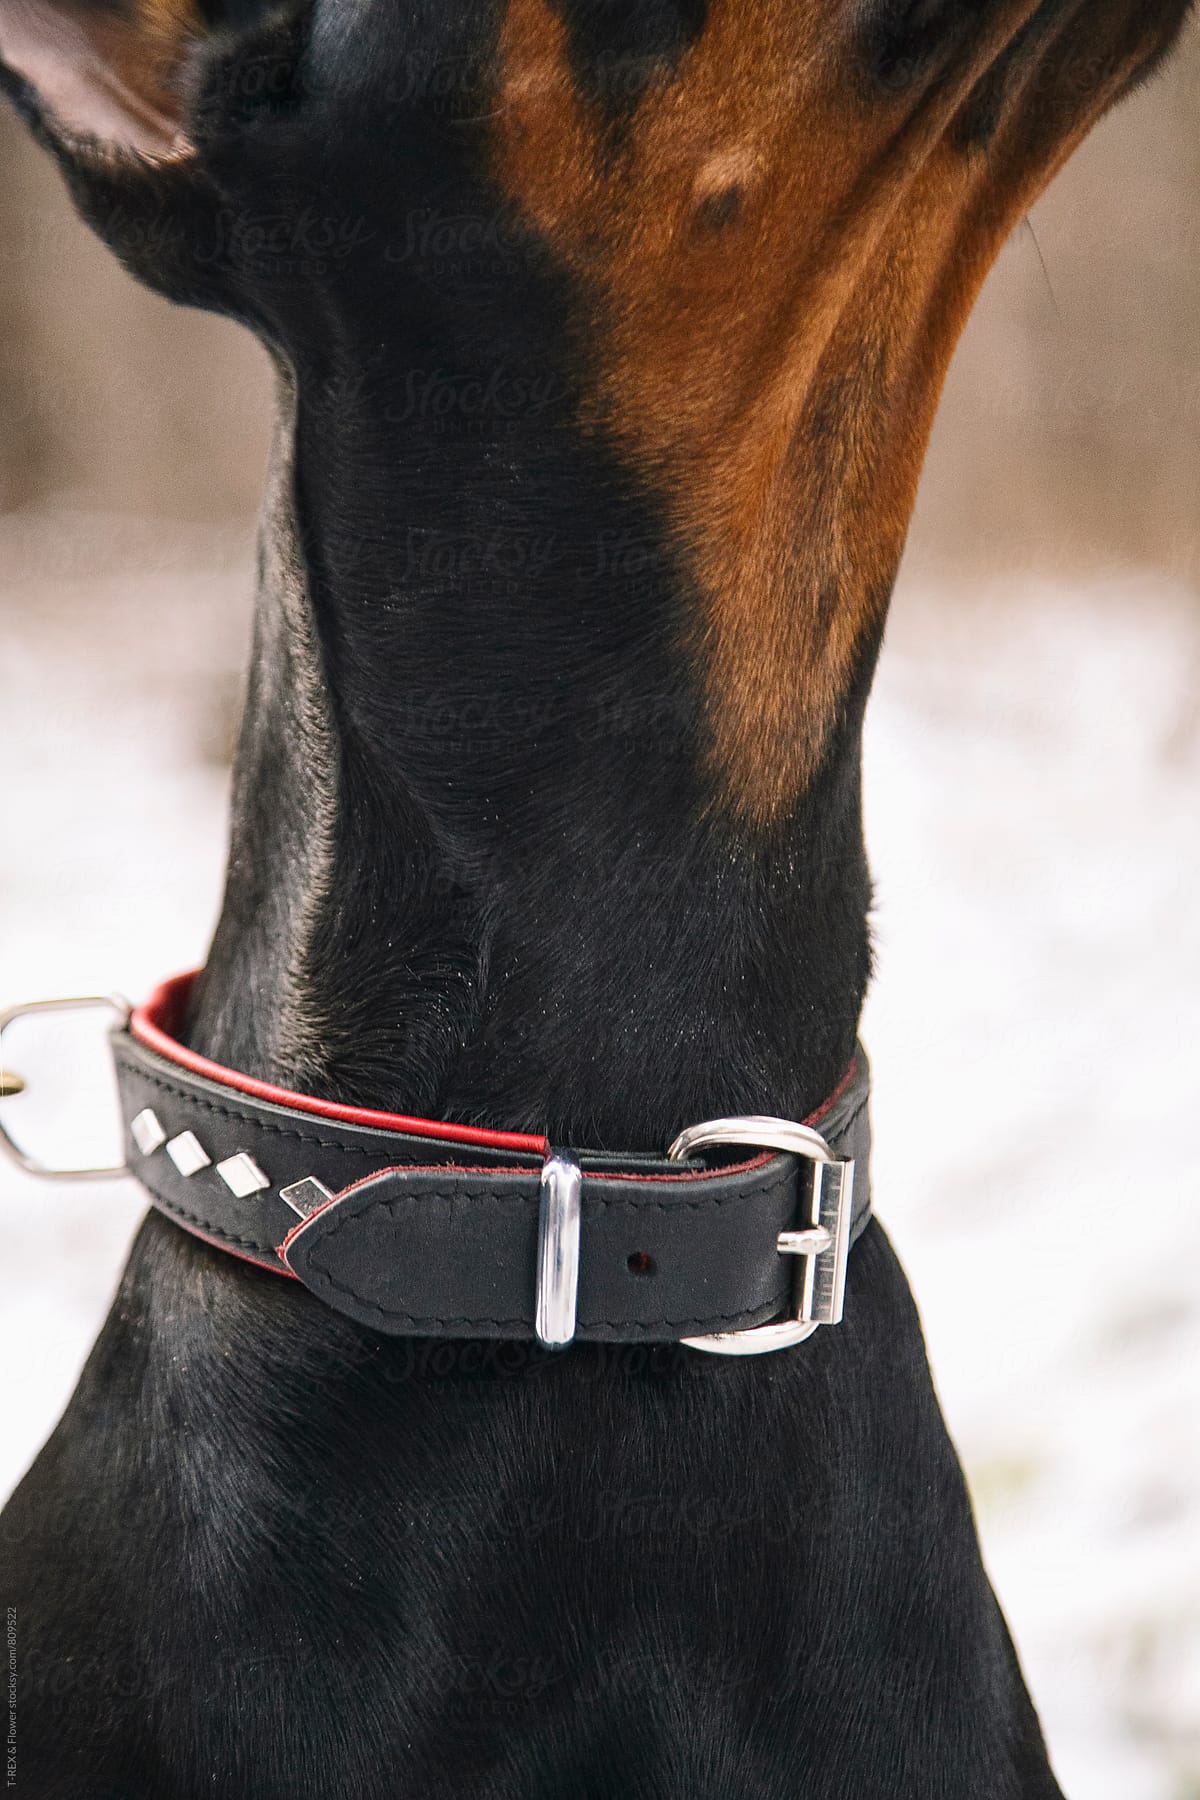 Dog\'s neck in dog collar